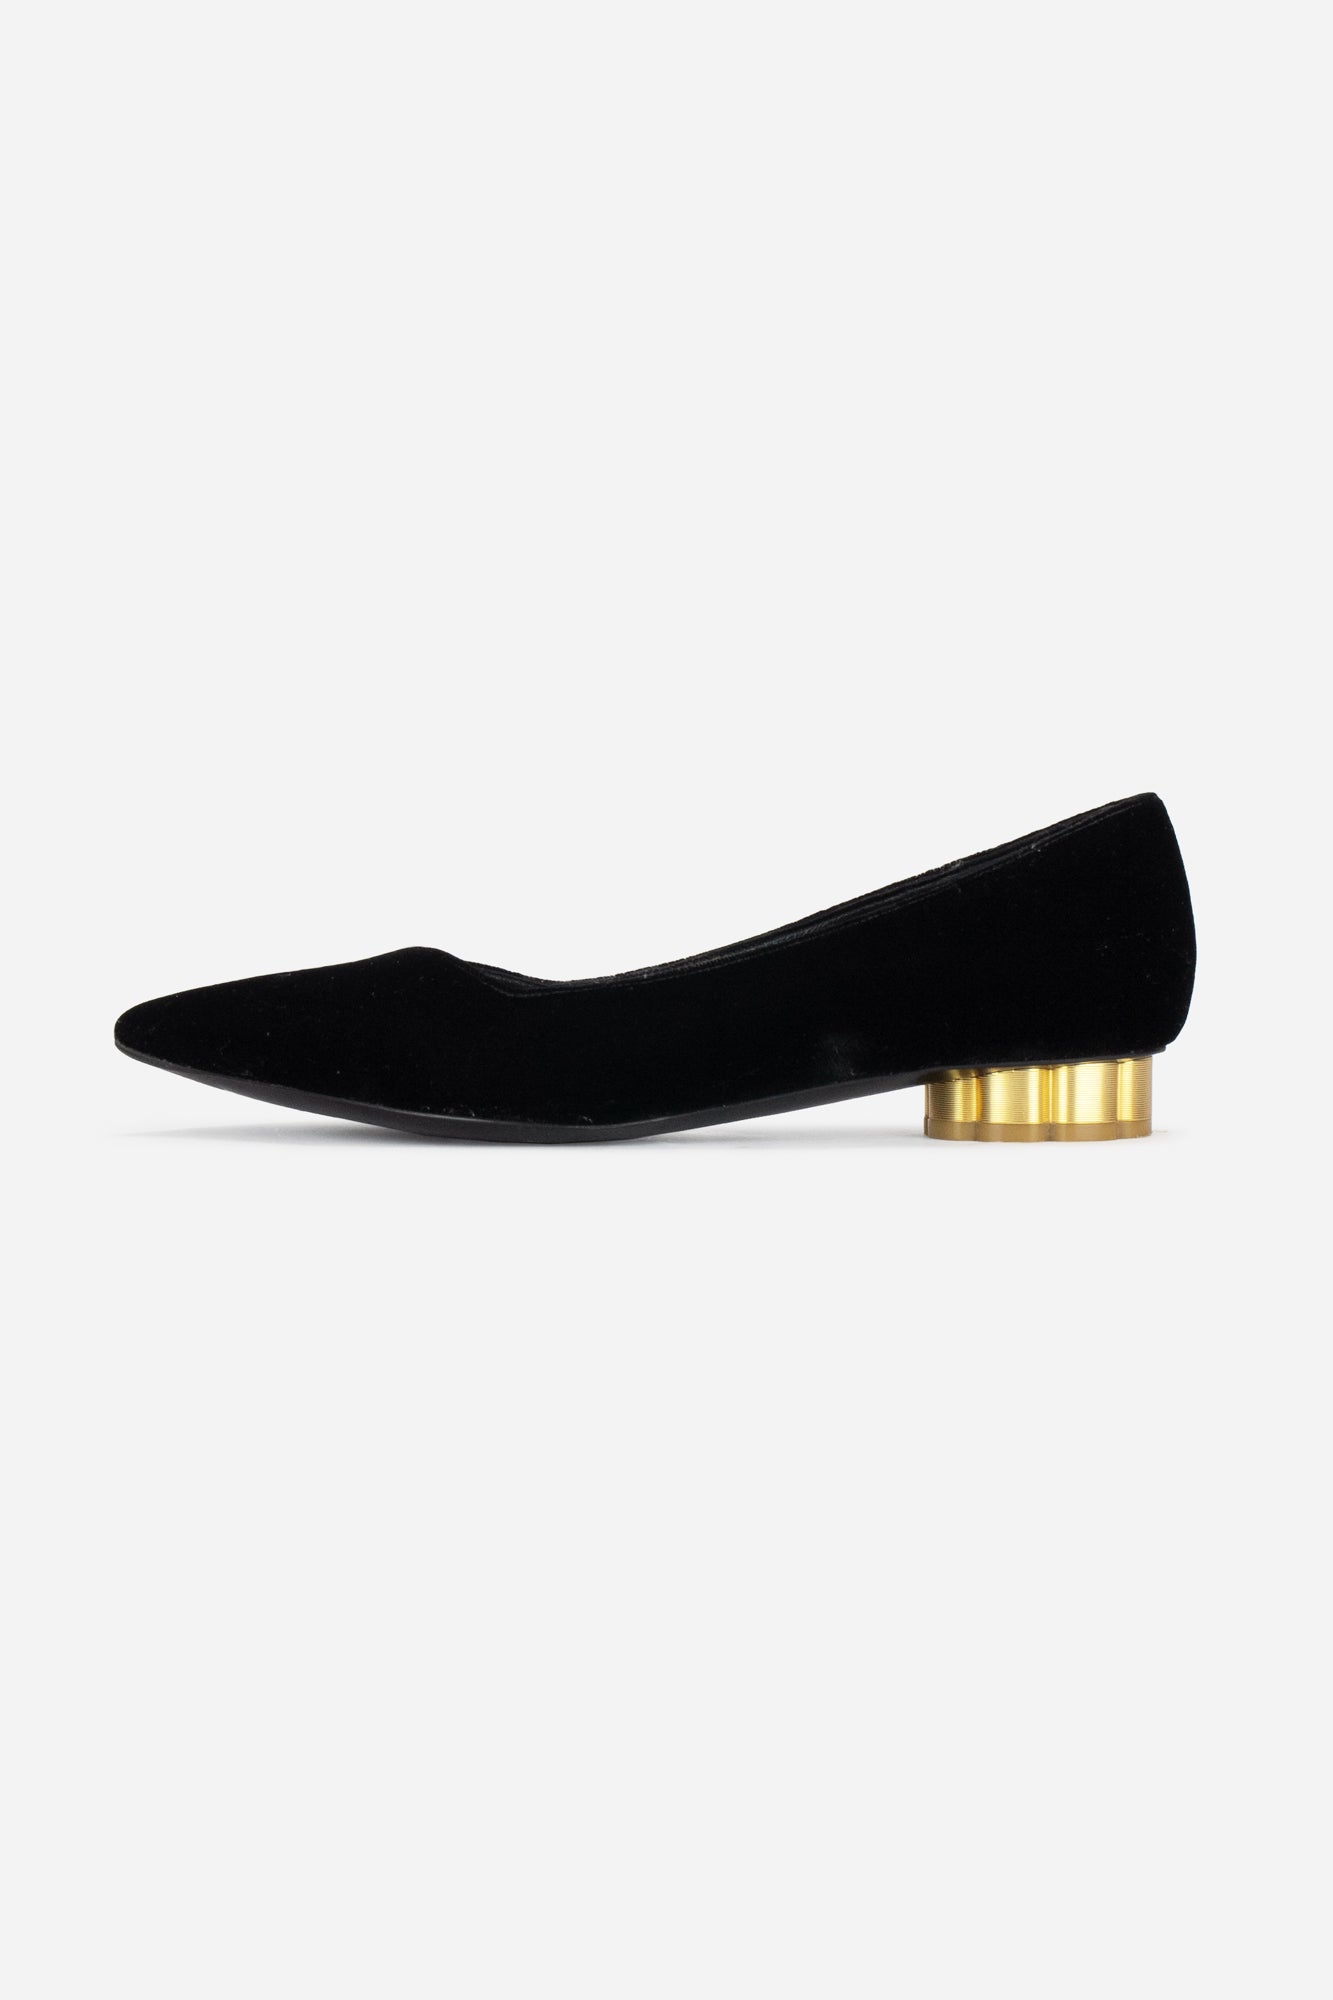 Black Velvet pointed toe flat with flower heel detail black suede, gold heel